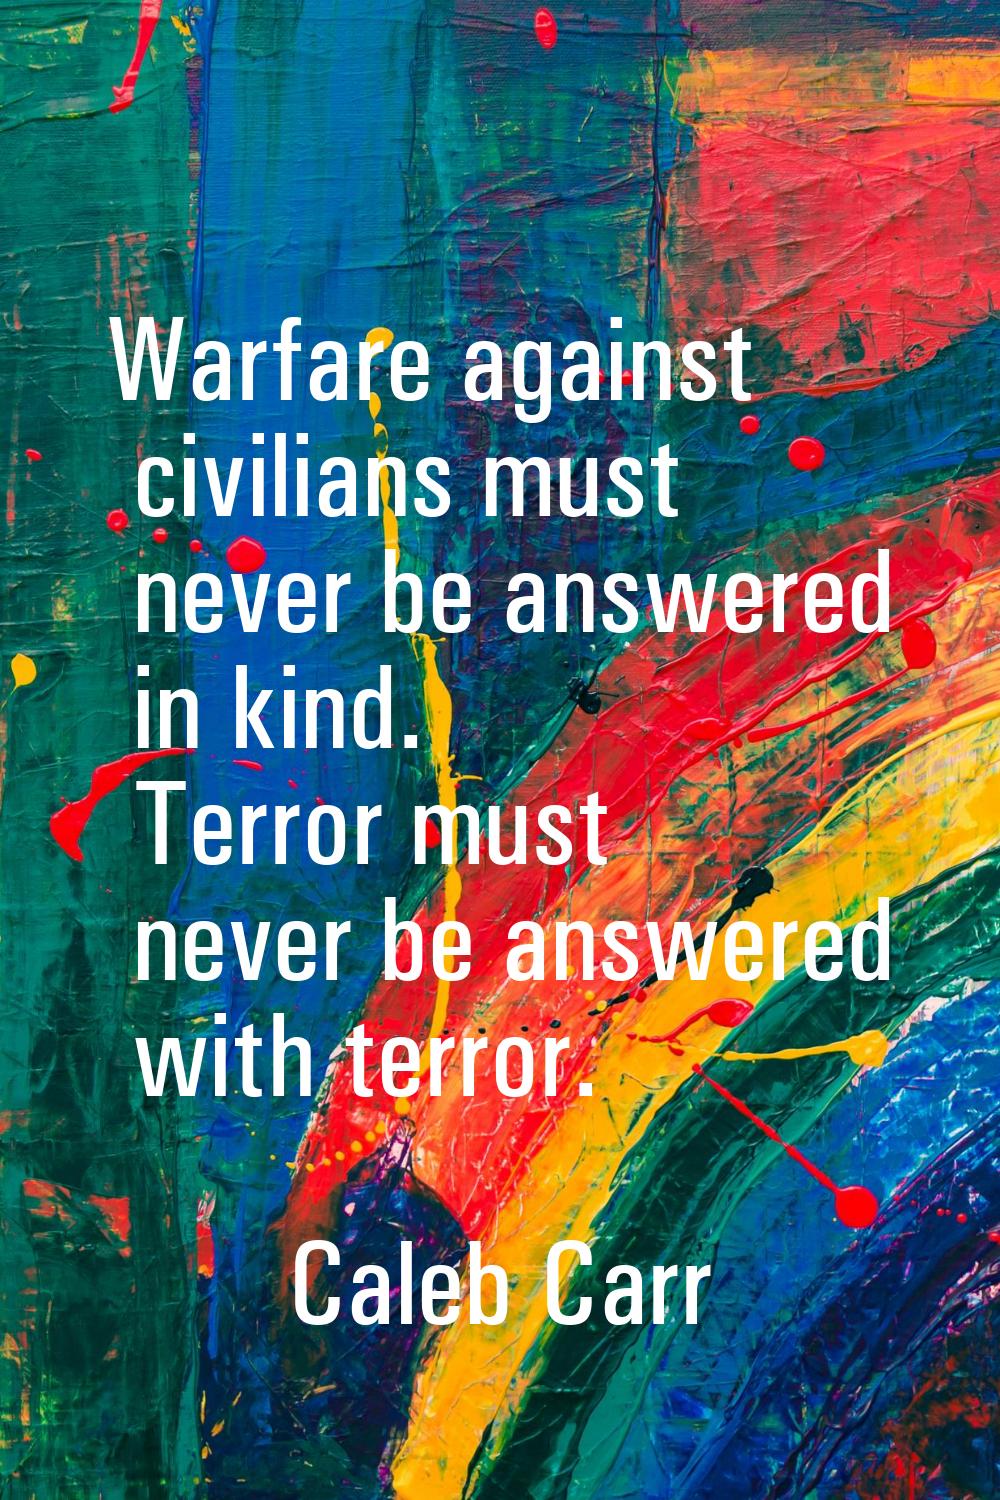 Warfare against civilians must never be answered in kind. Terror must never be answered with terror